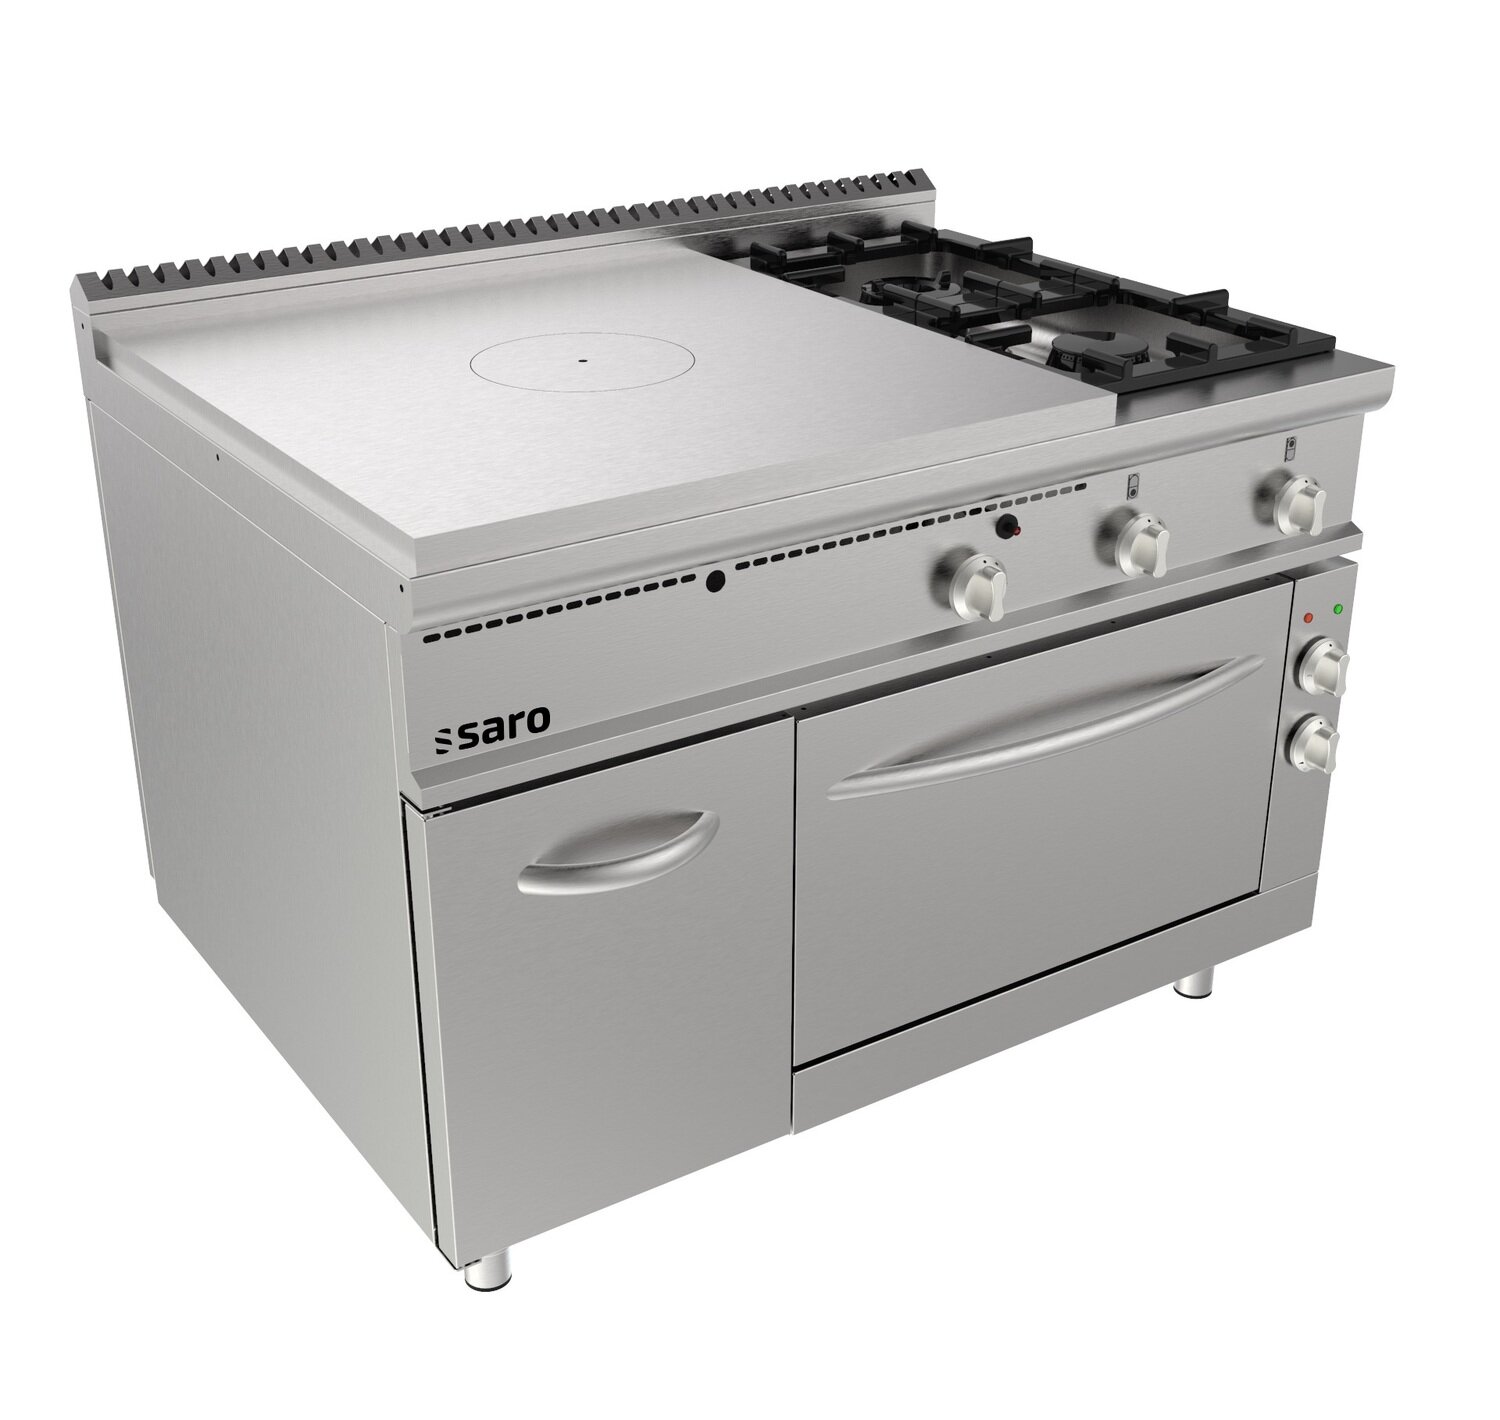 SARO Hot plate stove electric oven + 2 burners + door LQ model LQ / TPG6LE